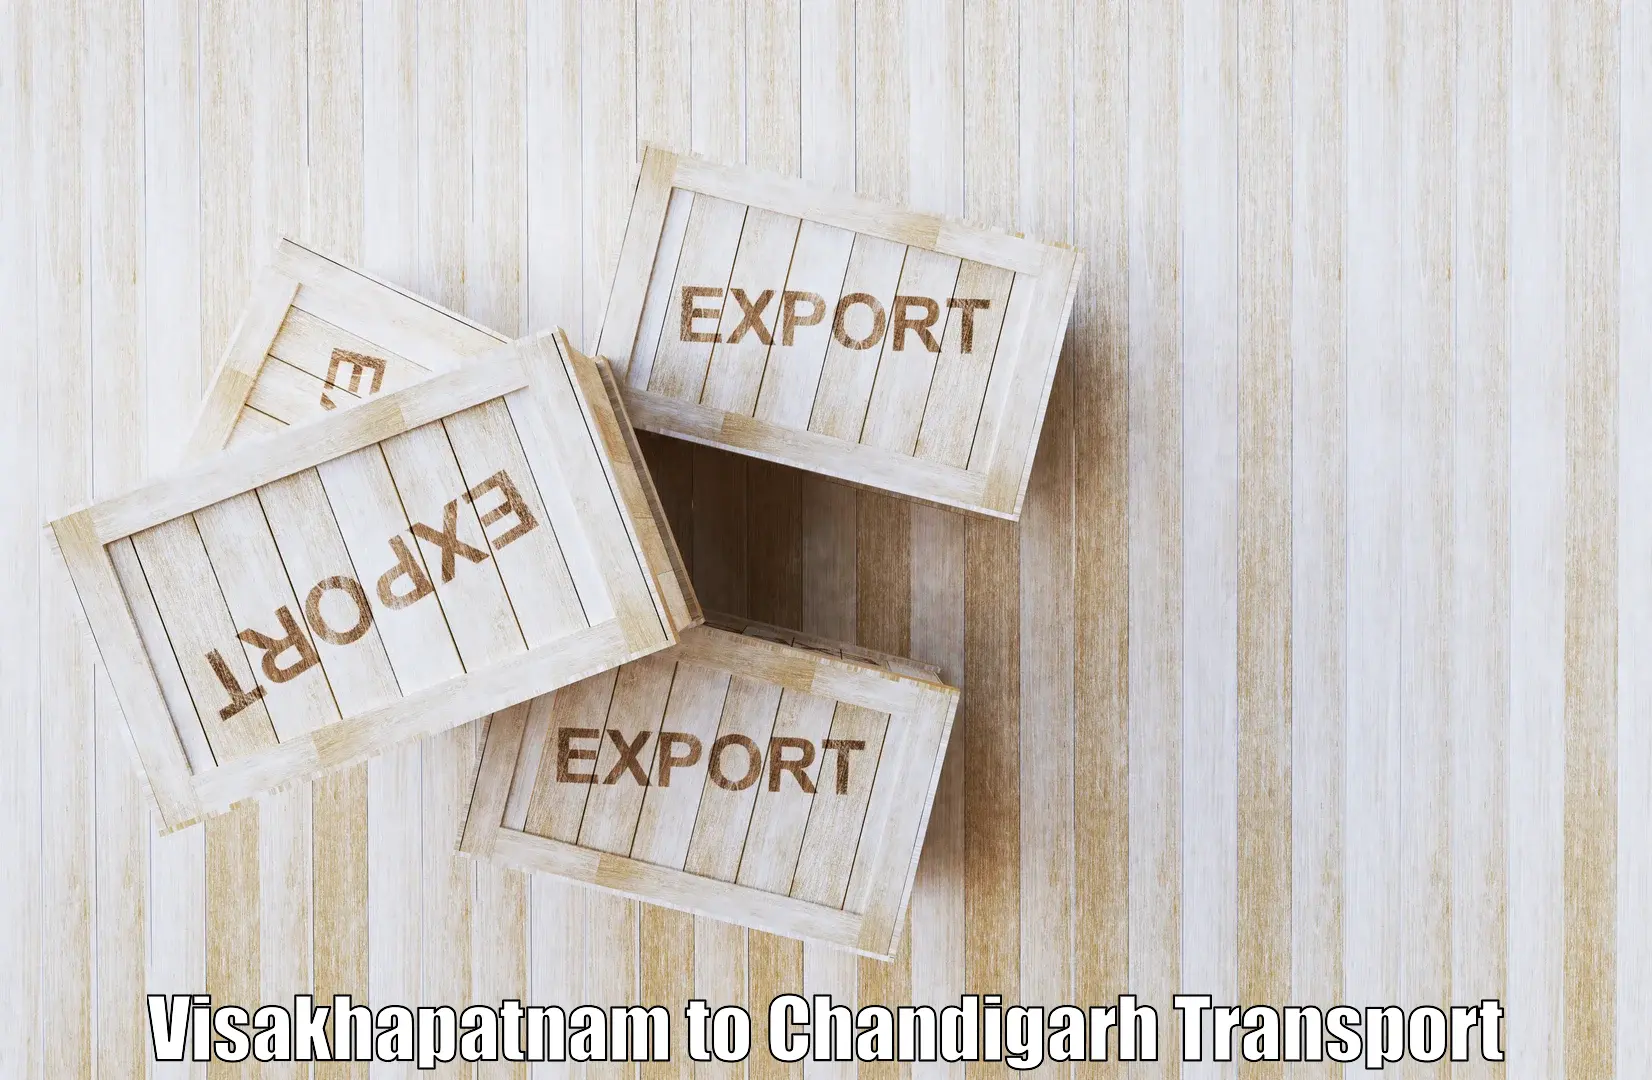 Transport in sharing in Visakhapatnam to Chandigarh